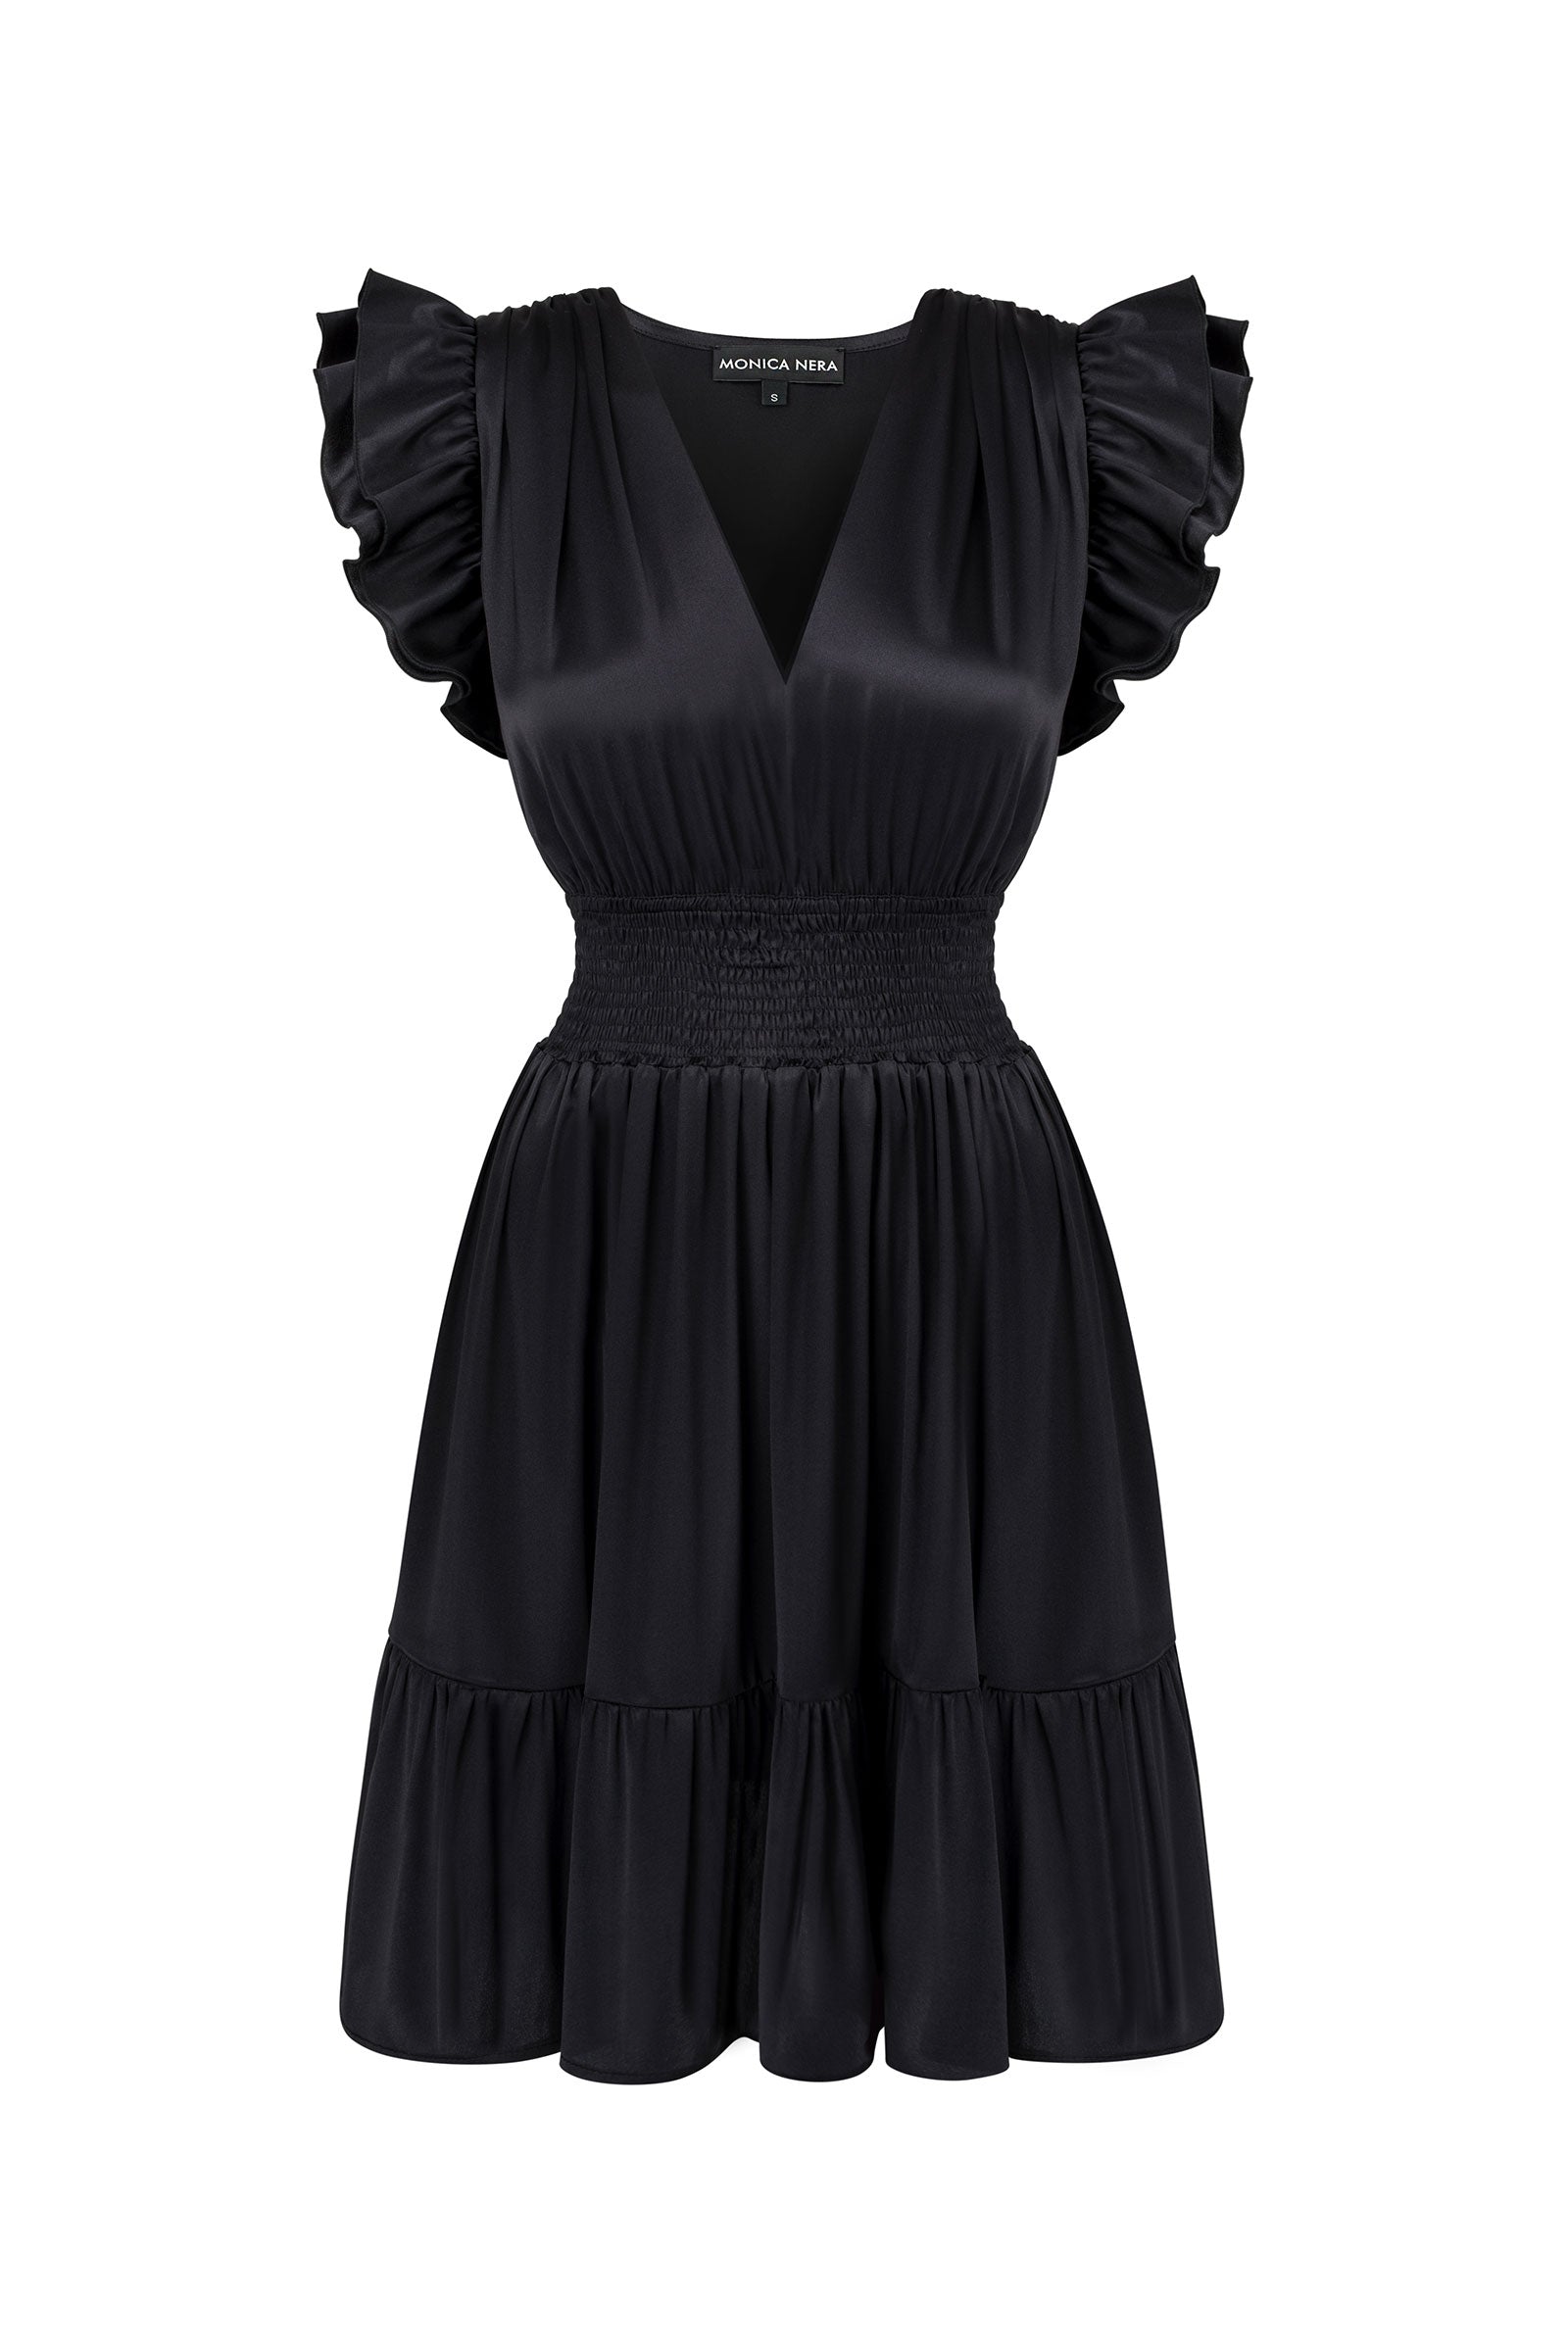 Monica Nera Women's Cathie Silk Dress - Black